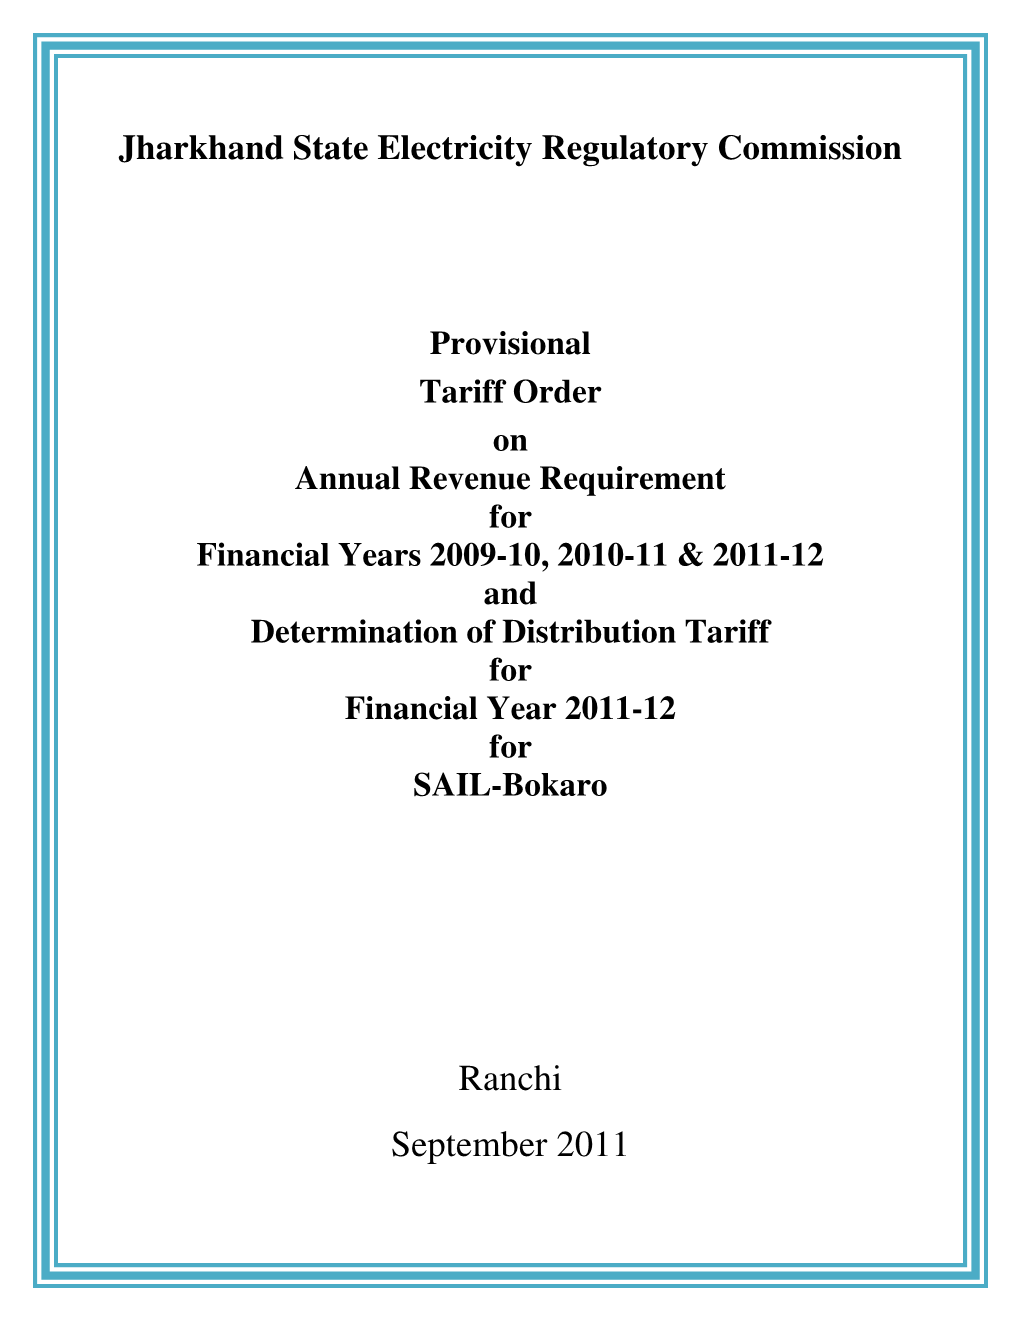 Tariff Order for SAIL-Bokaro 2011-12